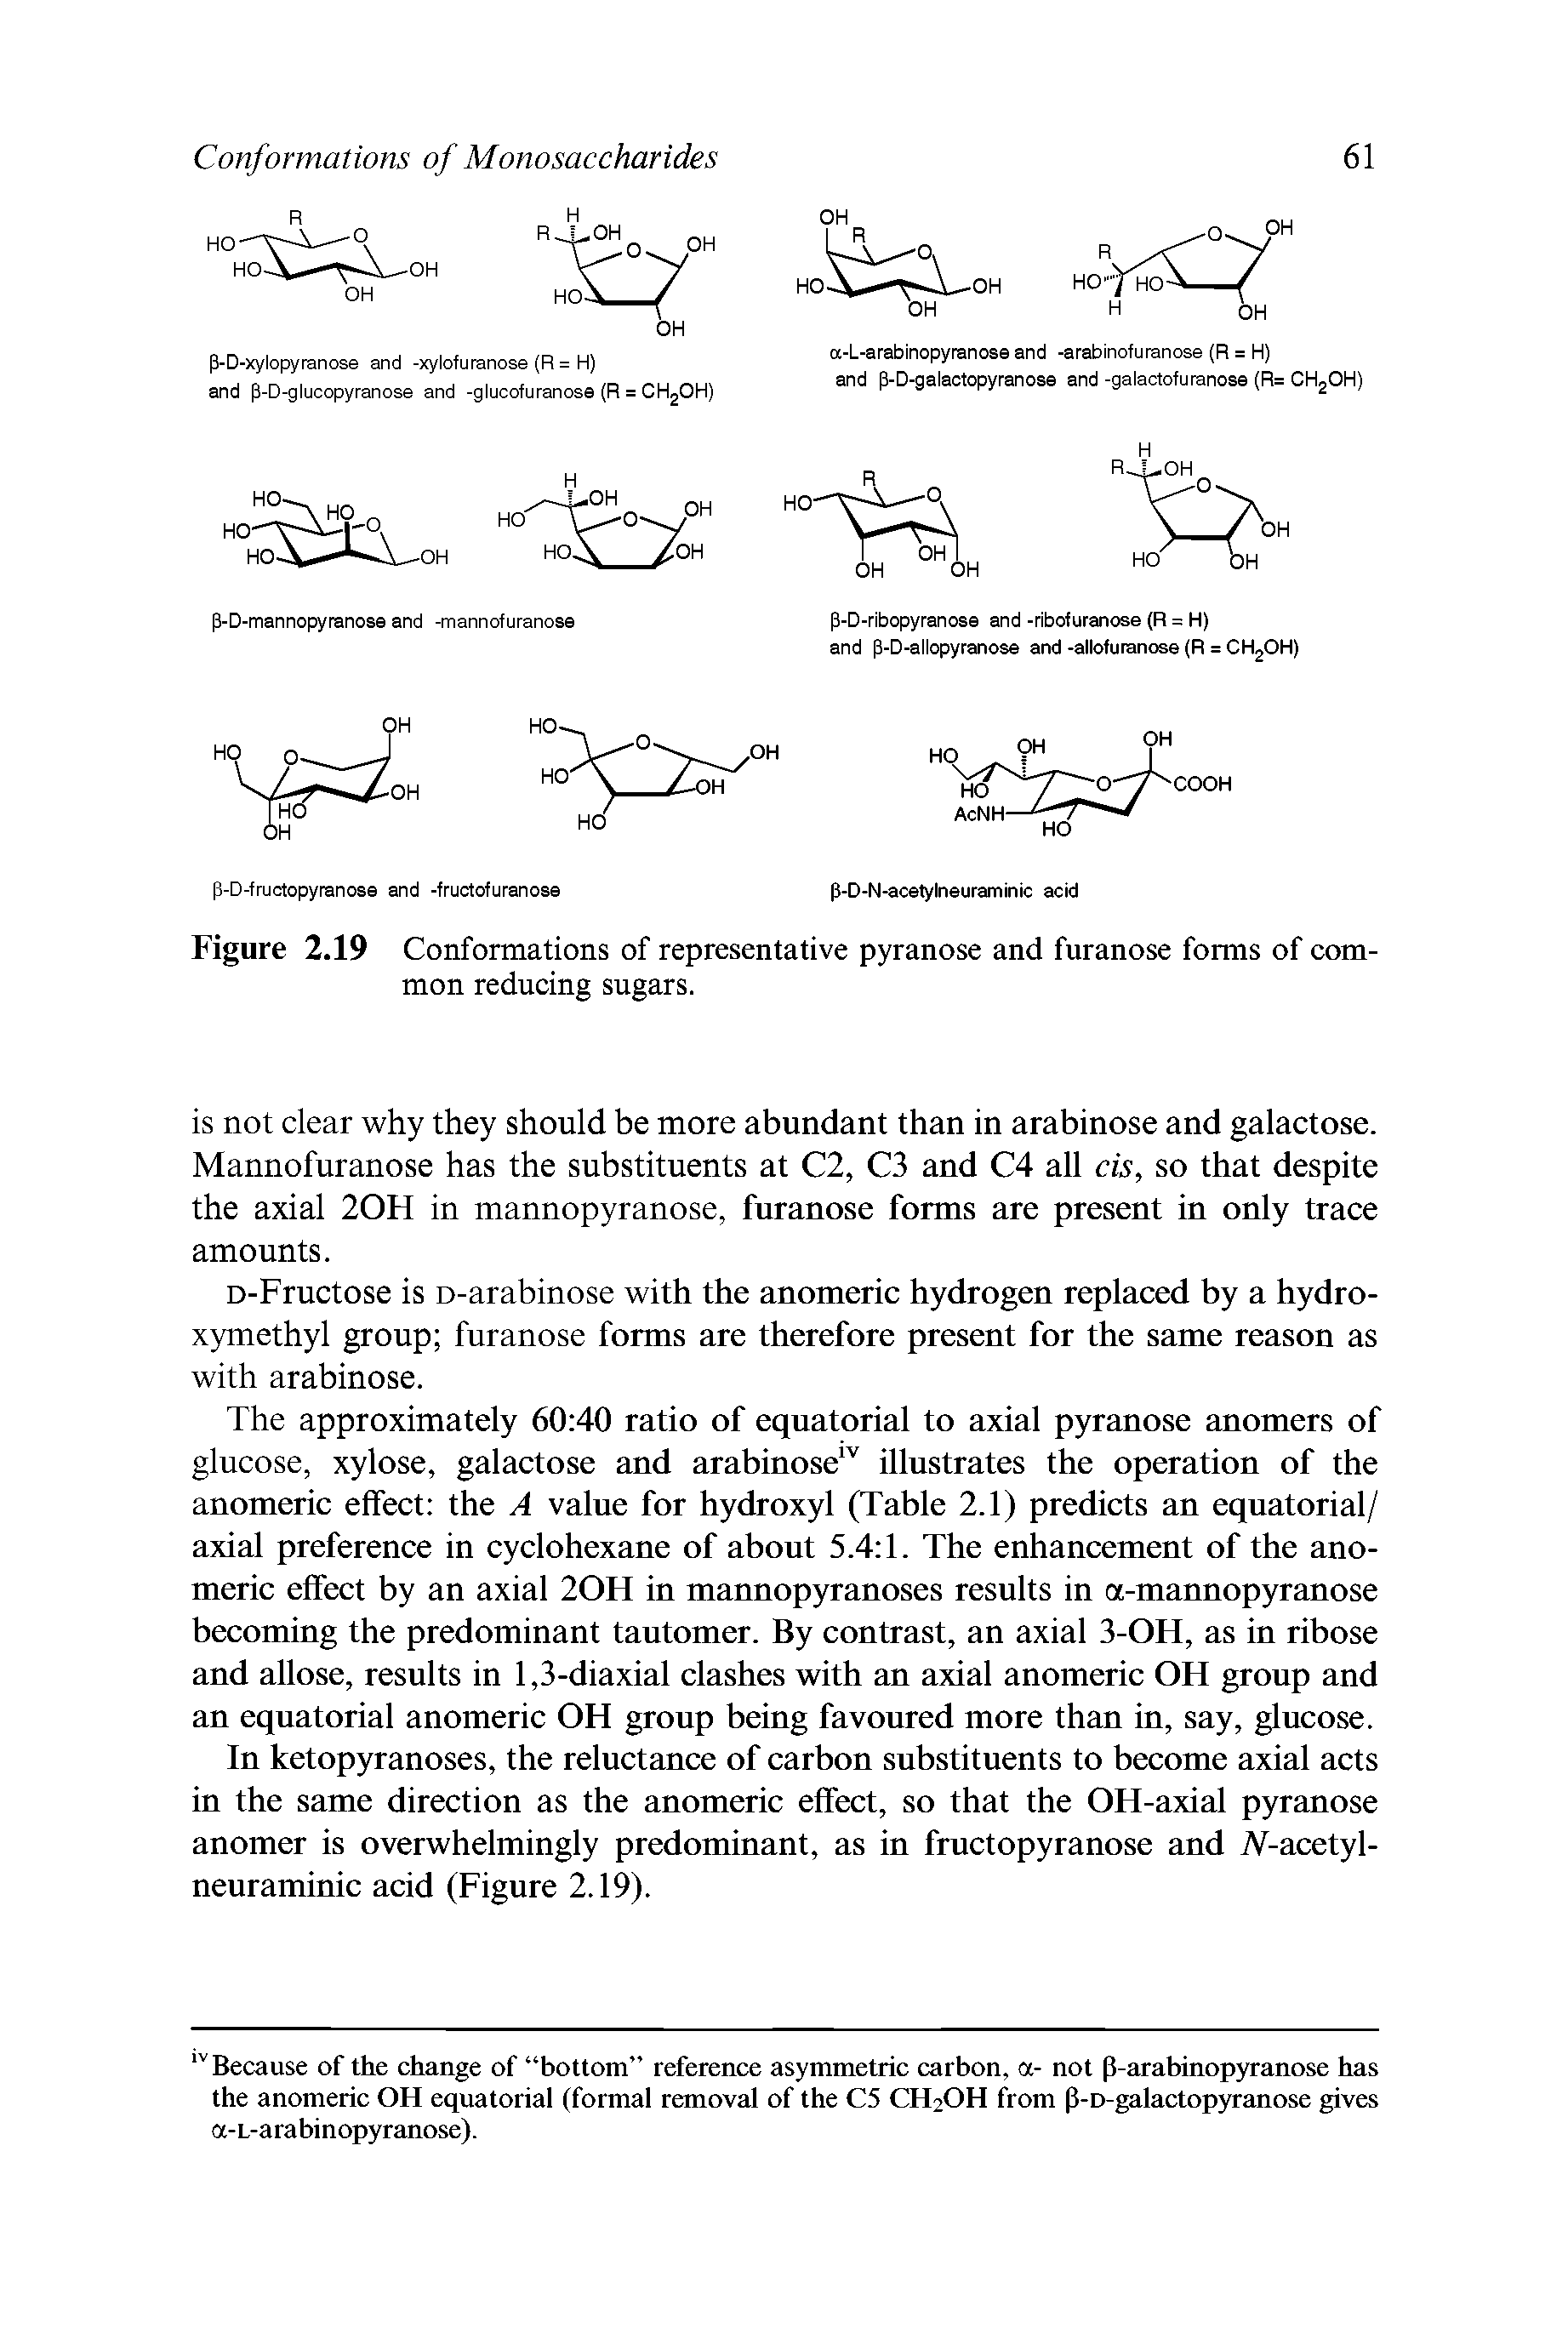 Figure 2.19 Conformations of representative pyranose and furanose forms of common reducing sugars.